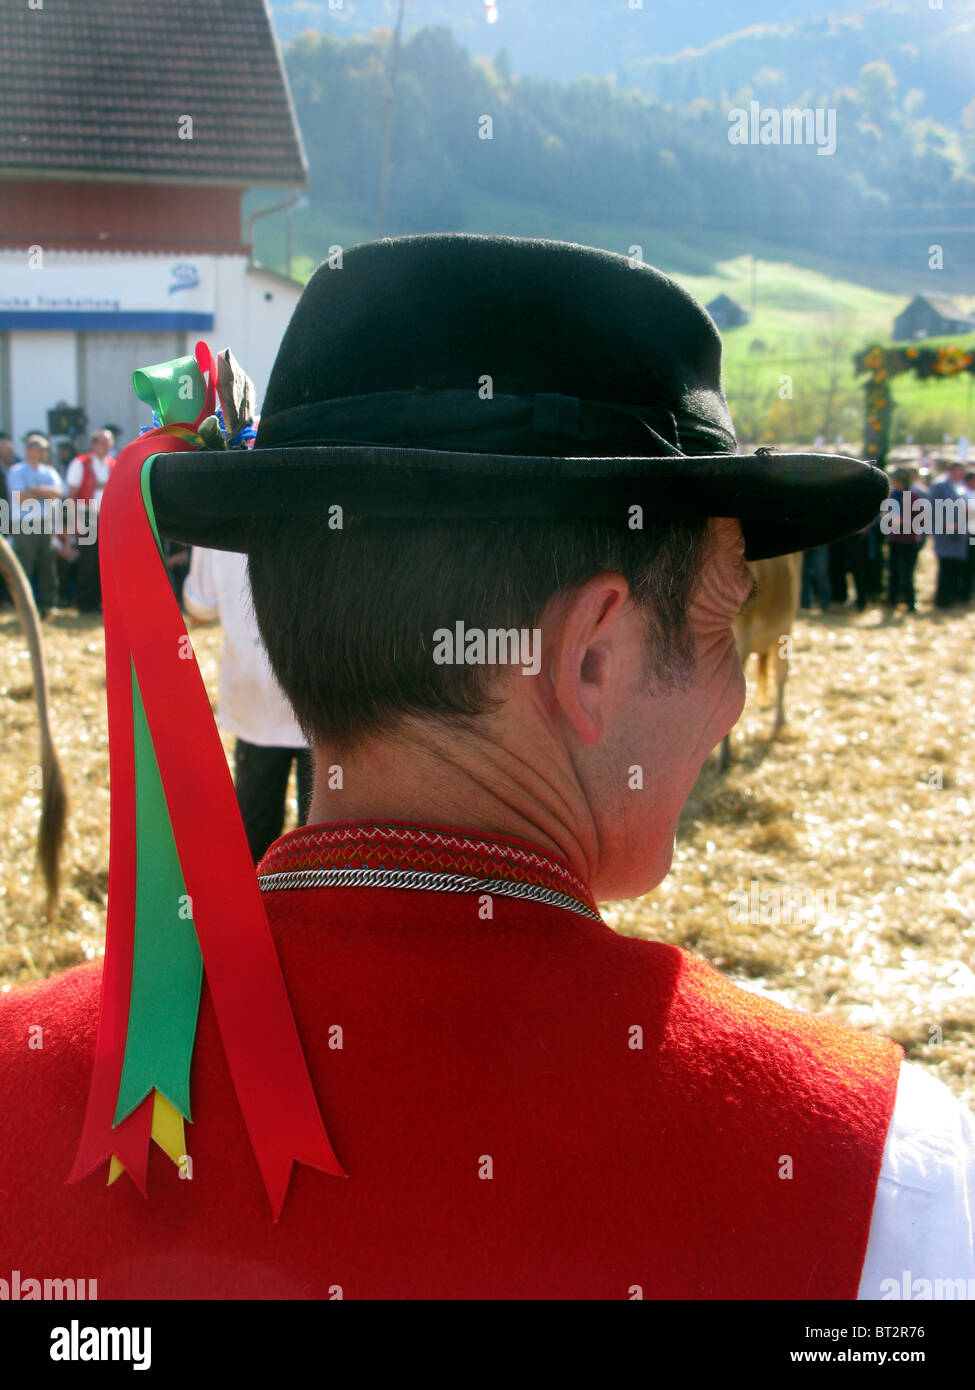 swiss cowboy, local dress, Switzerland Stock Photo - Alamy